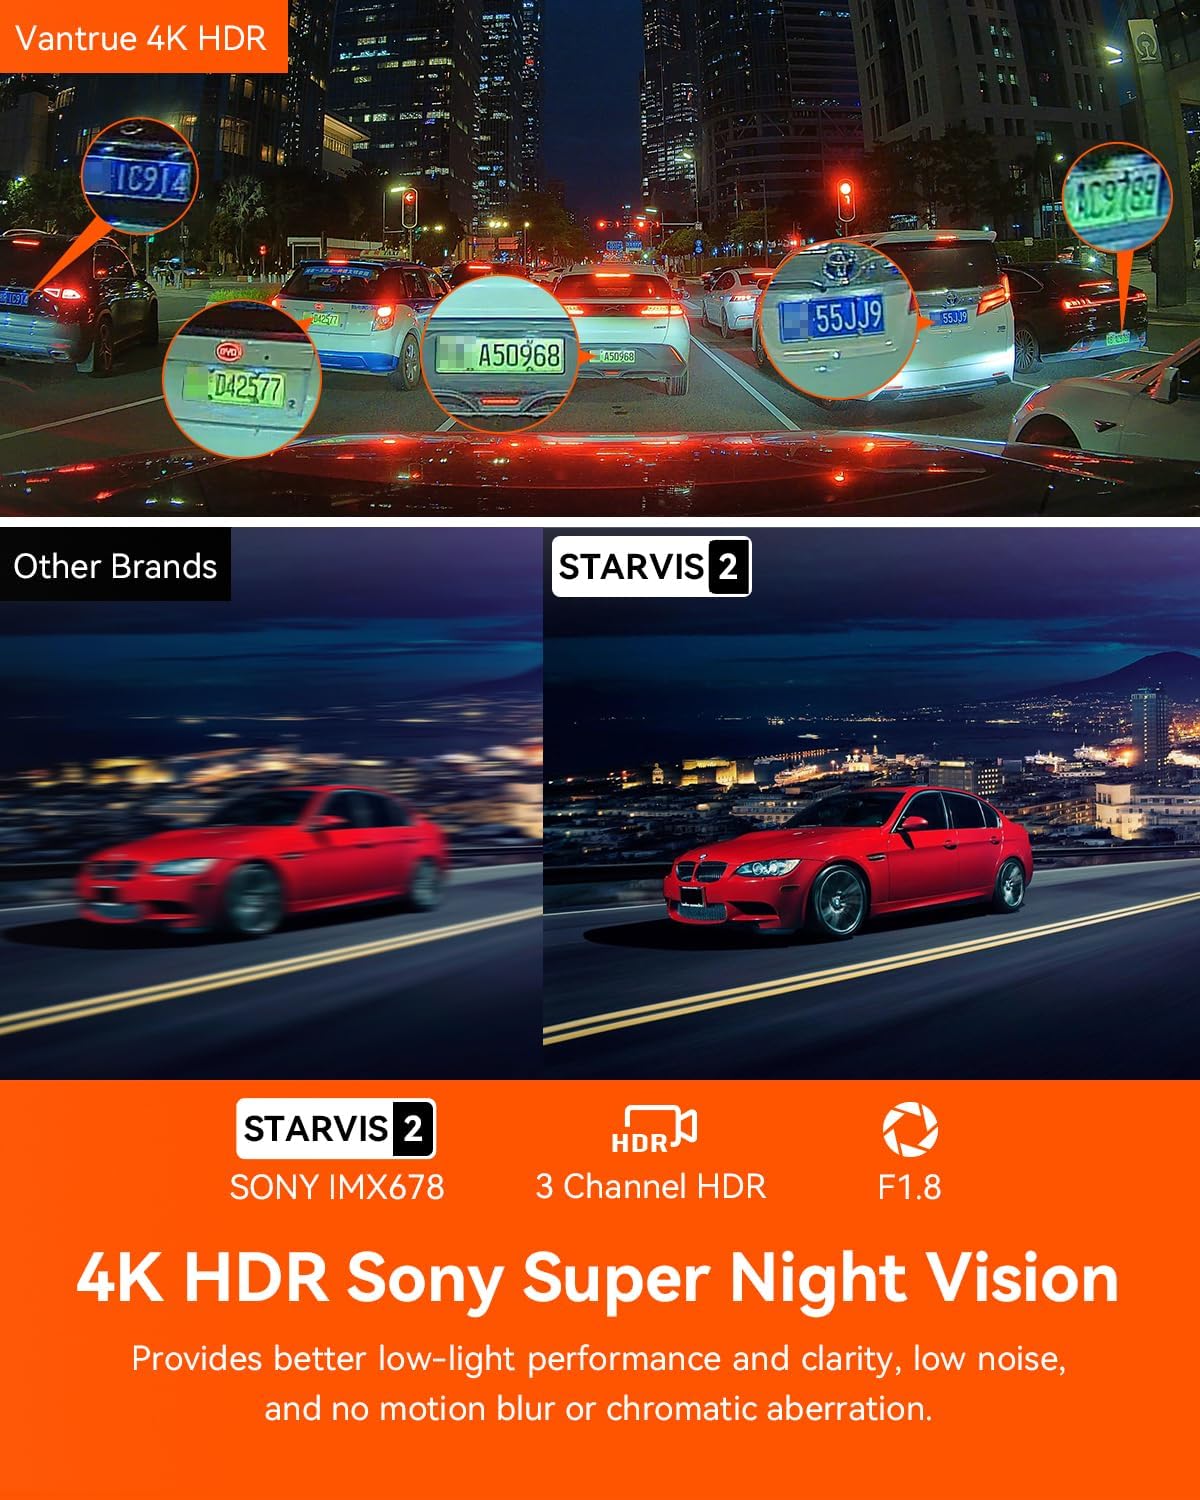 Vantrue N5 4 Channel 360° WiFi Dash Cam with STARVIS 2 IR Night